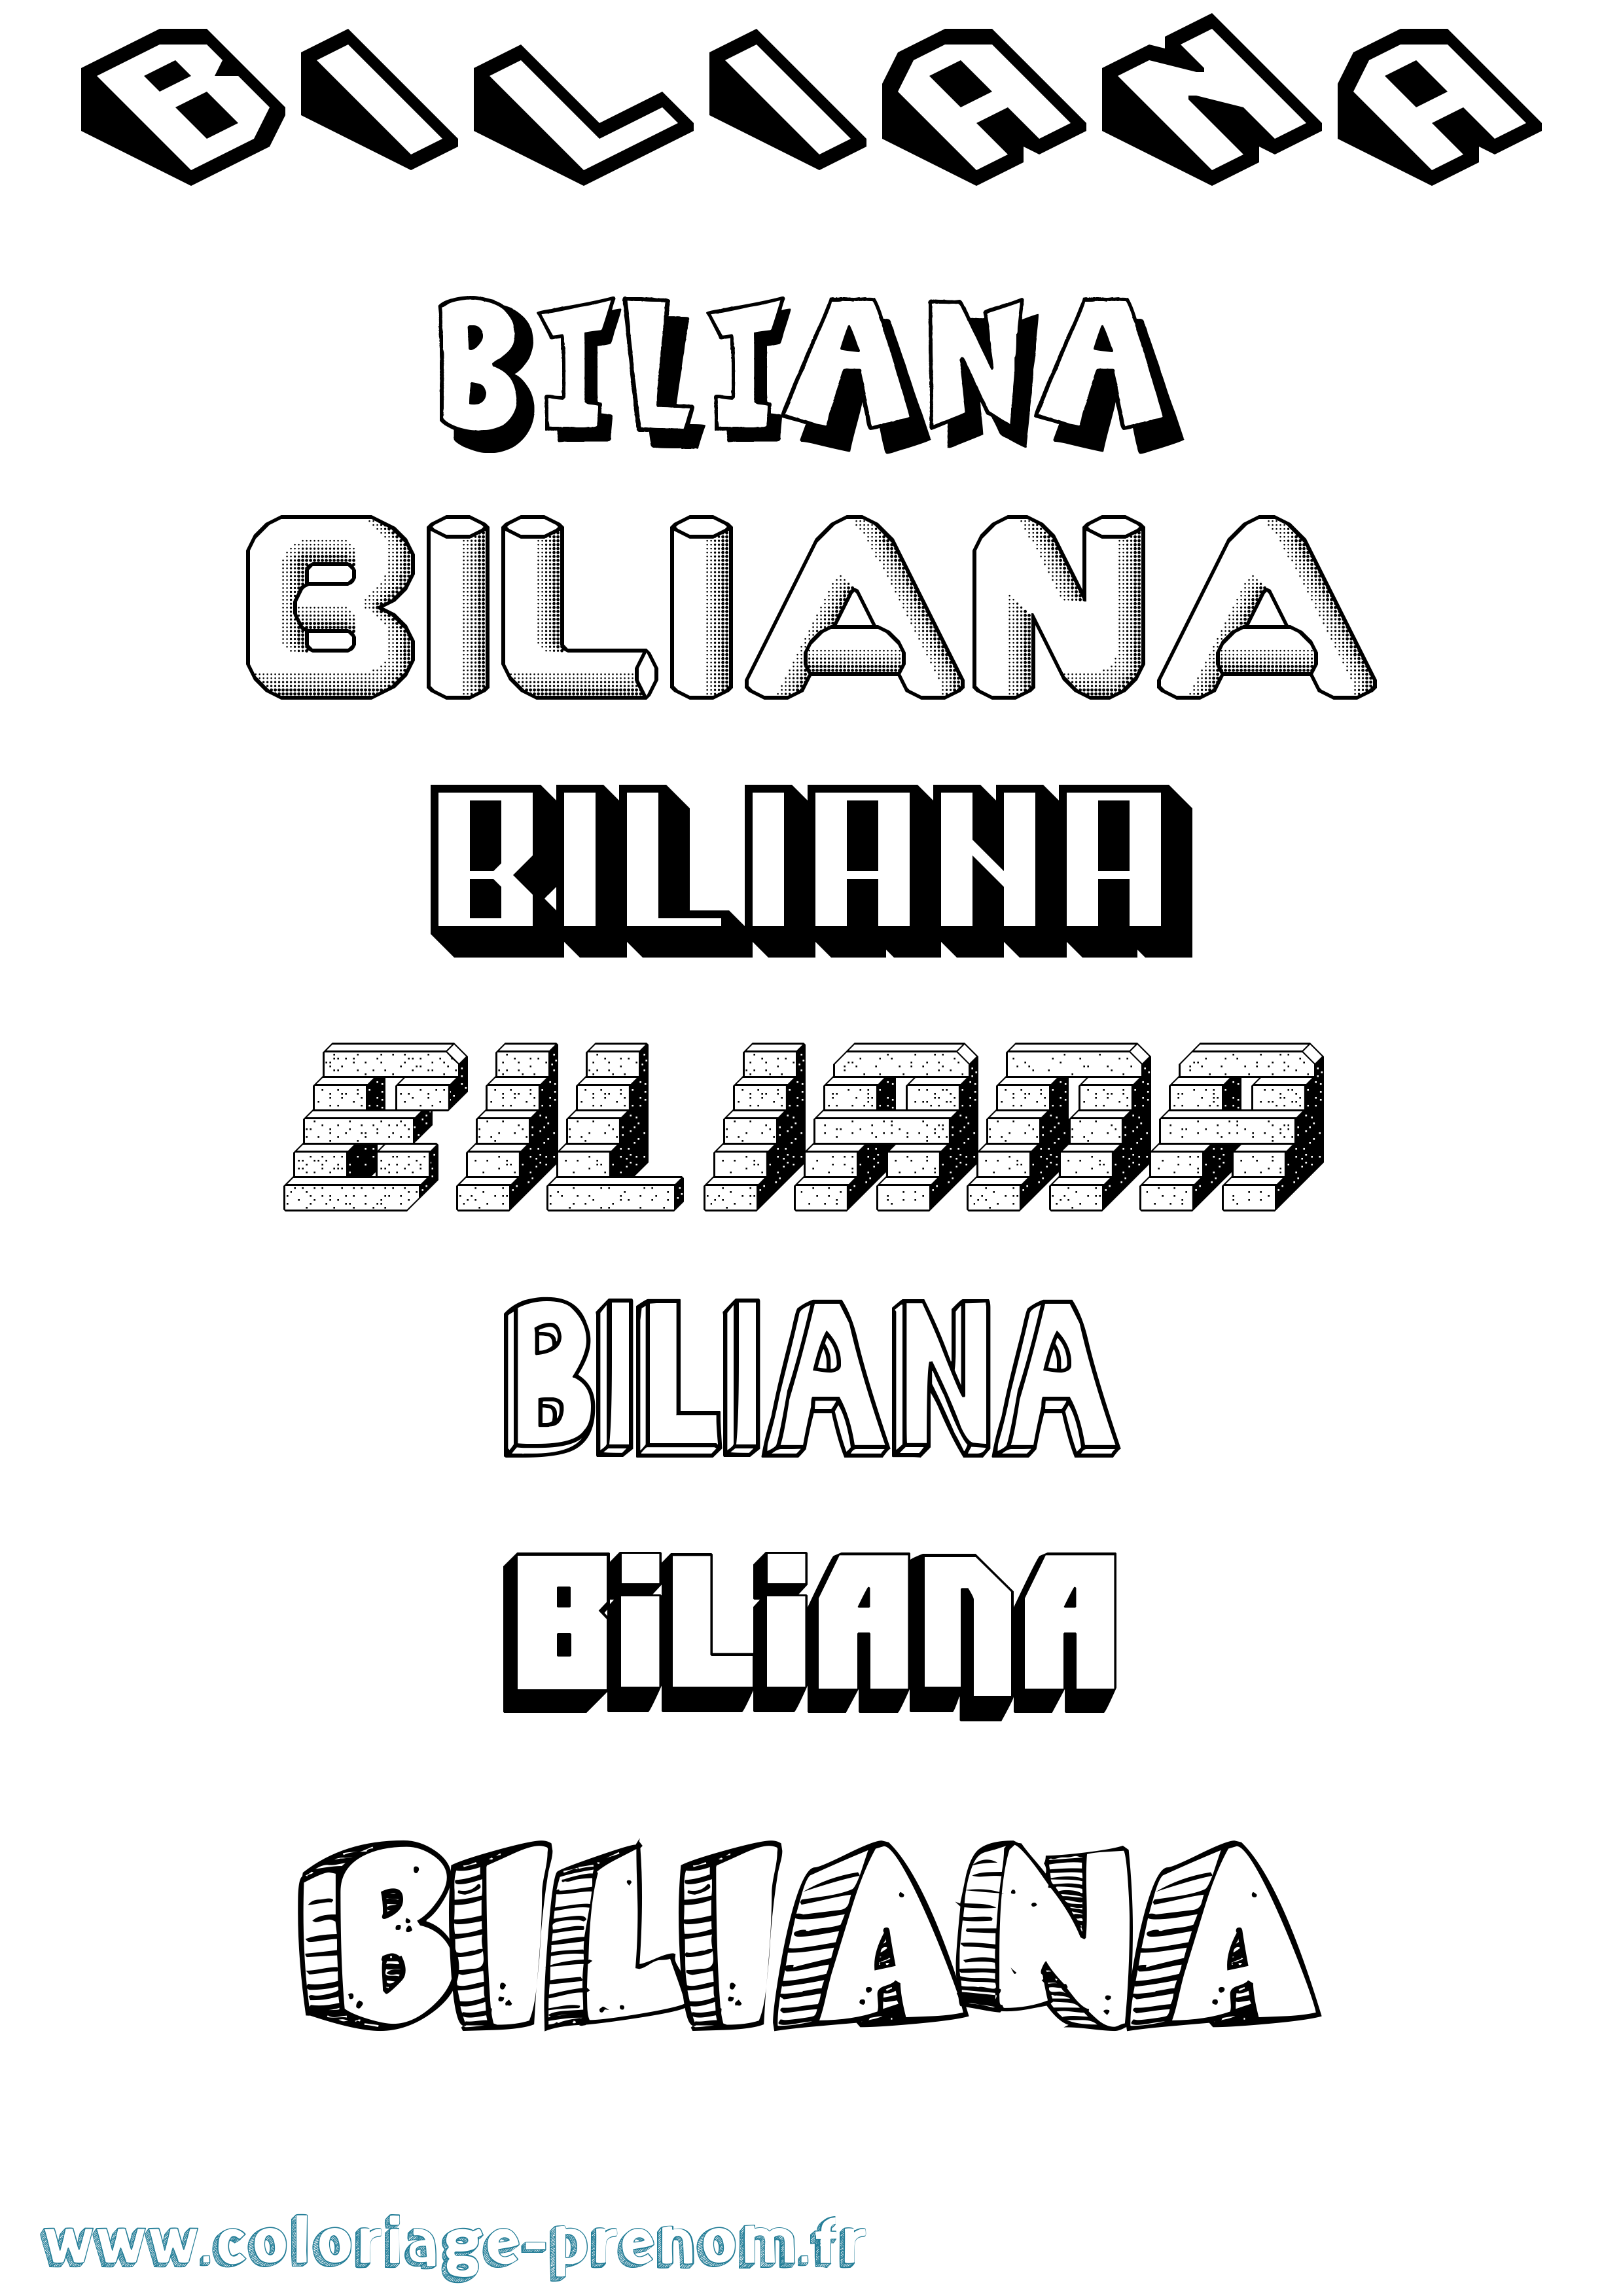 Coloriage prénom Biliana Effet 3D